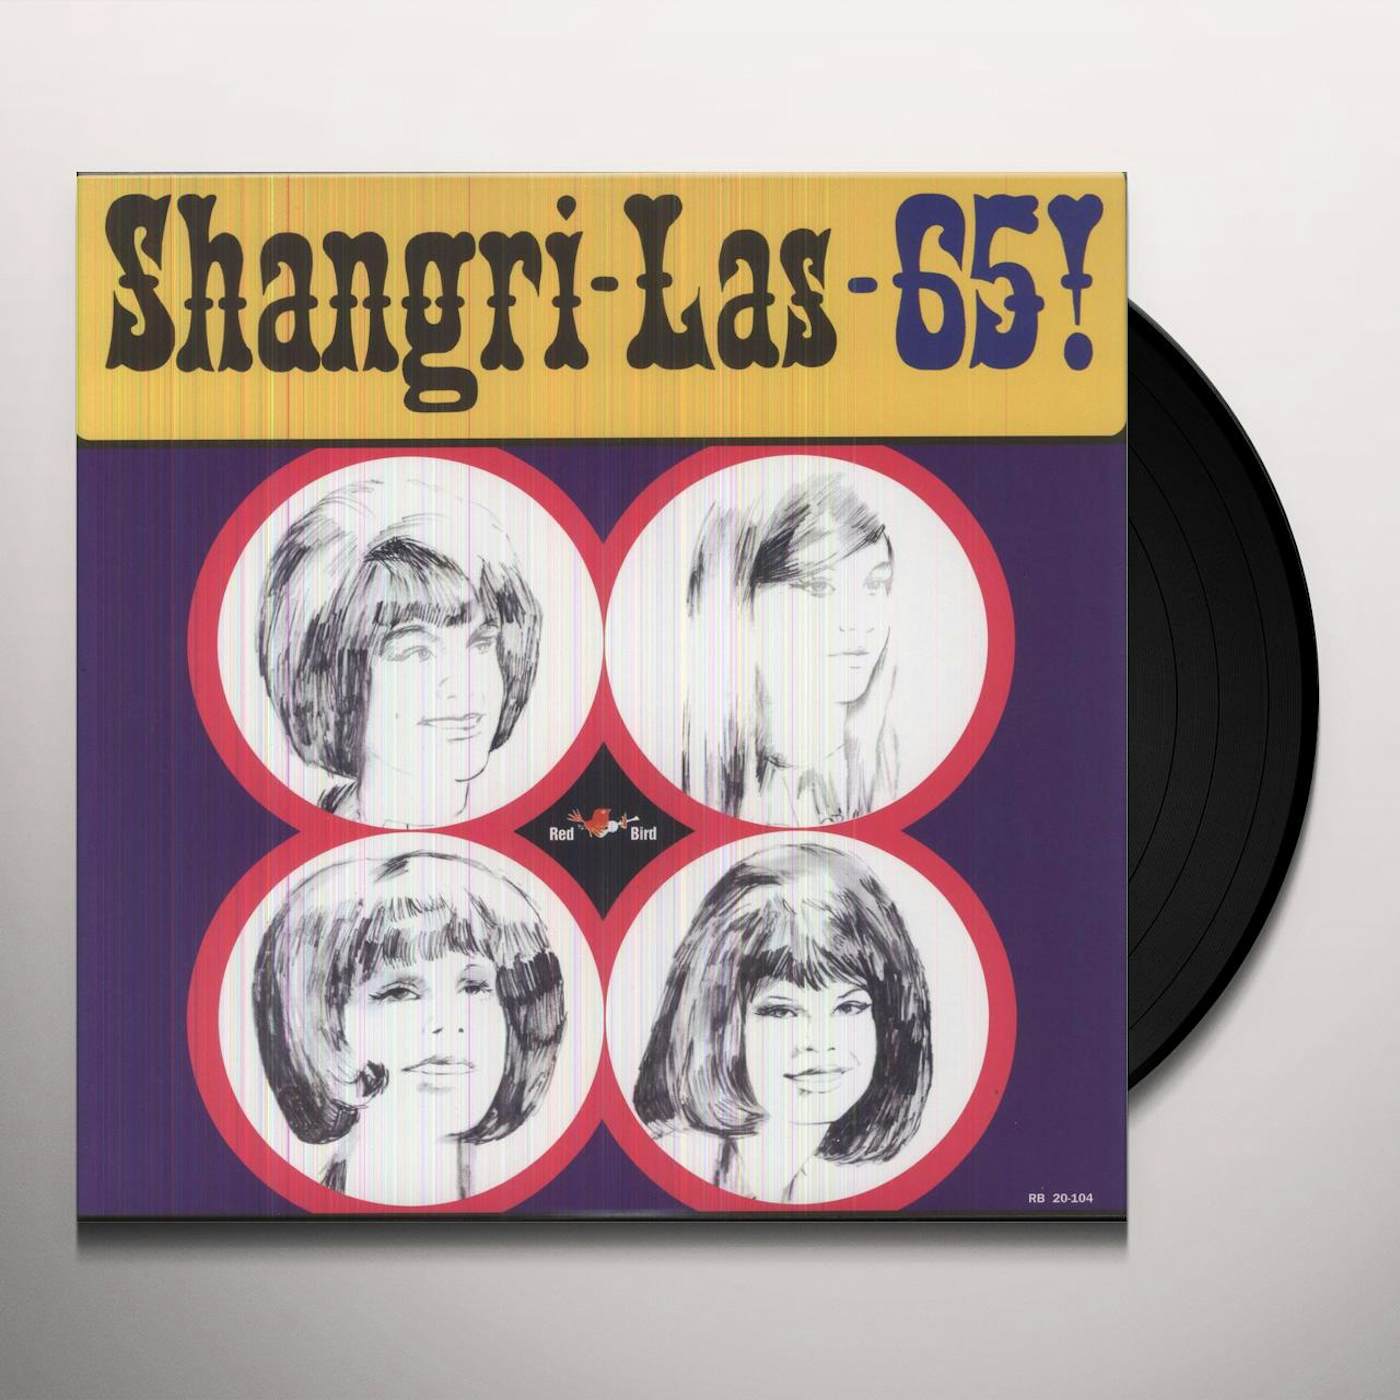 SHANGRA-LAS 65 Vinyl Record